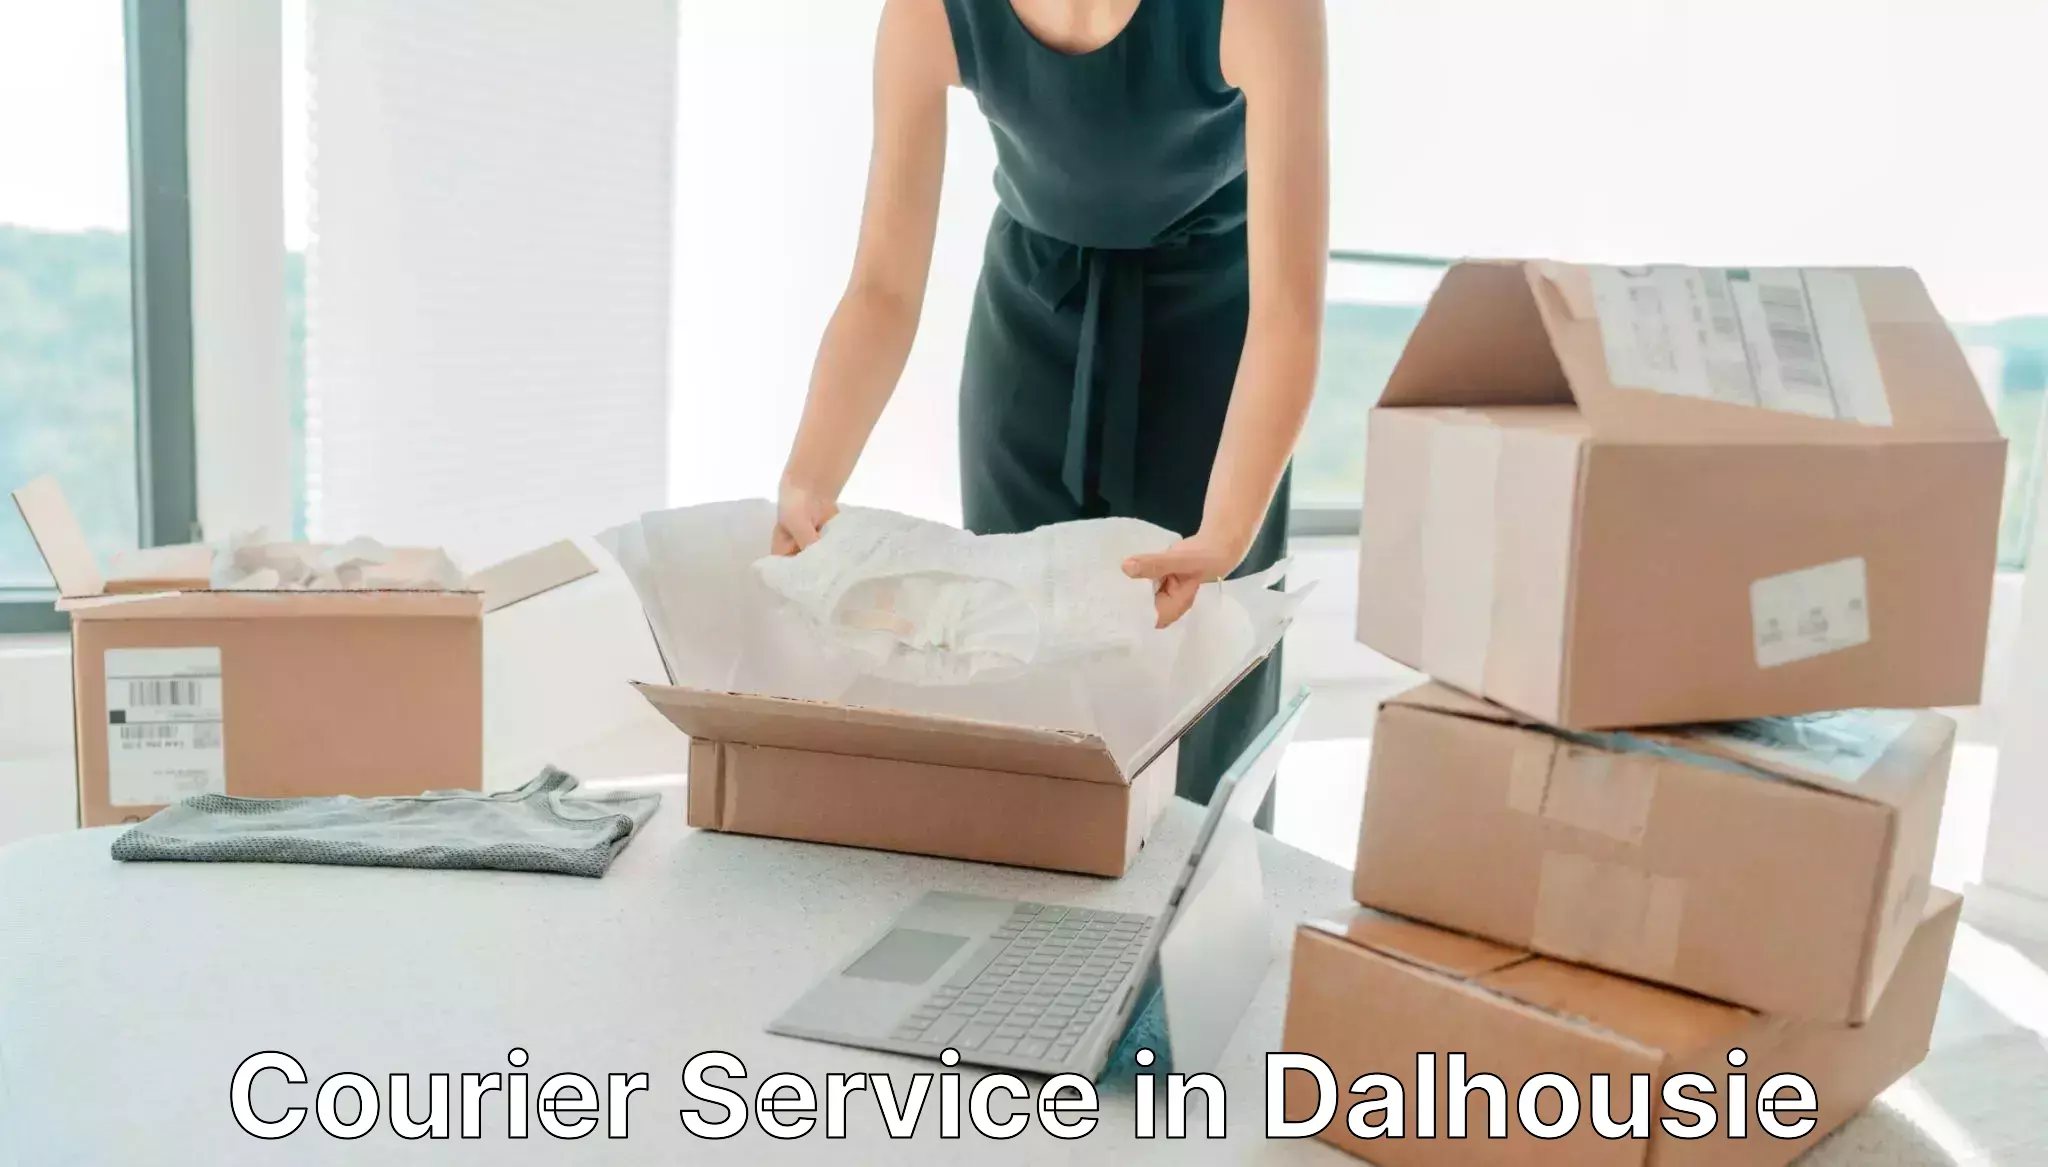 24/7 courier service in Dalhousie